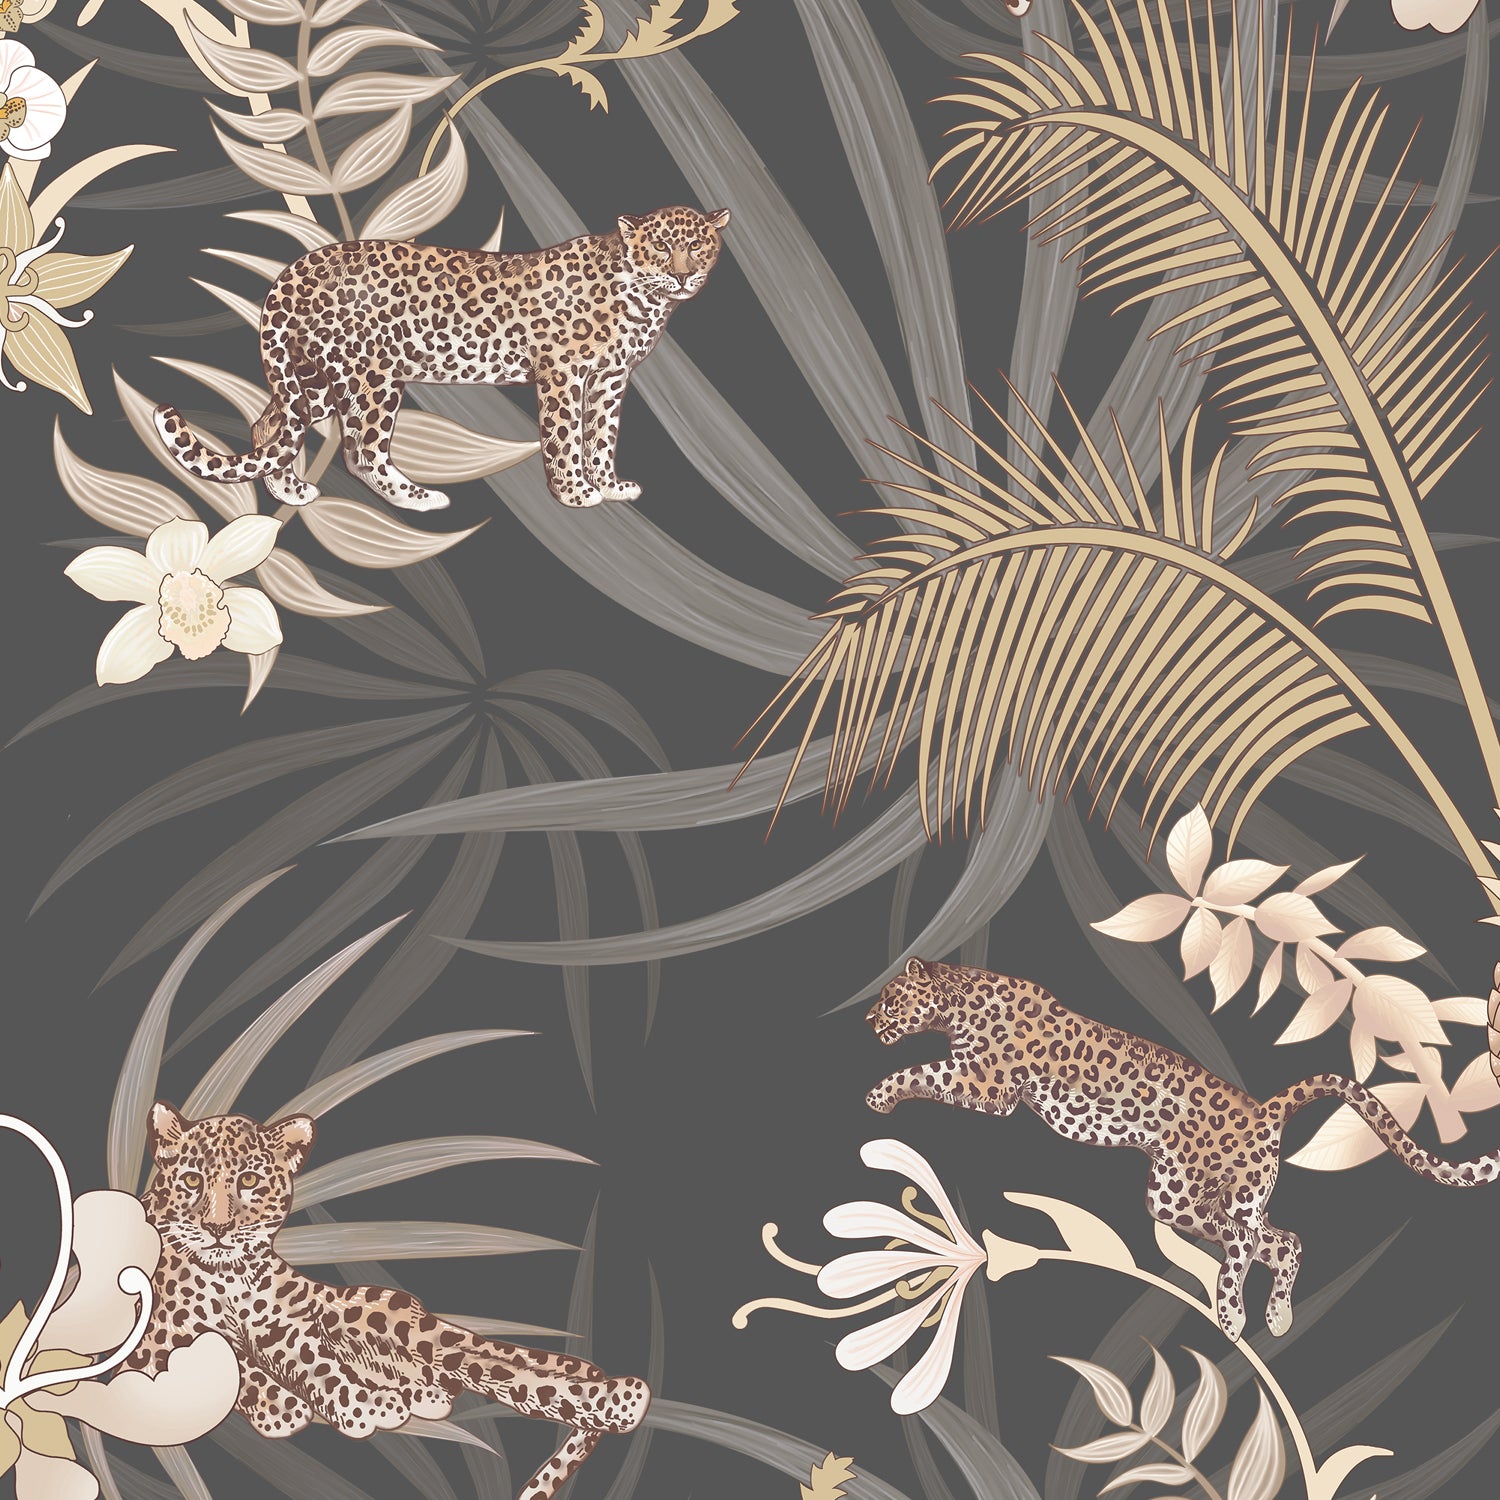 Black Leopard  Charcoal wallpaper, Leopard print wallpaper, Animal print  wallpaper